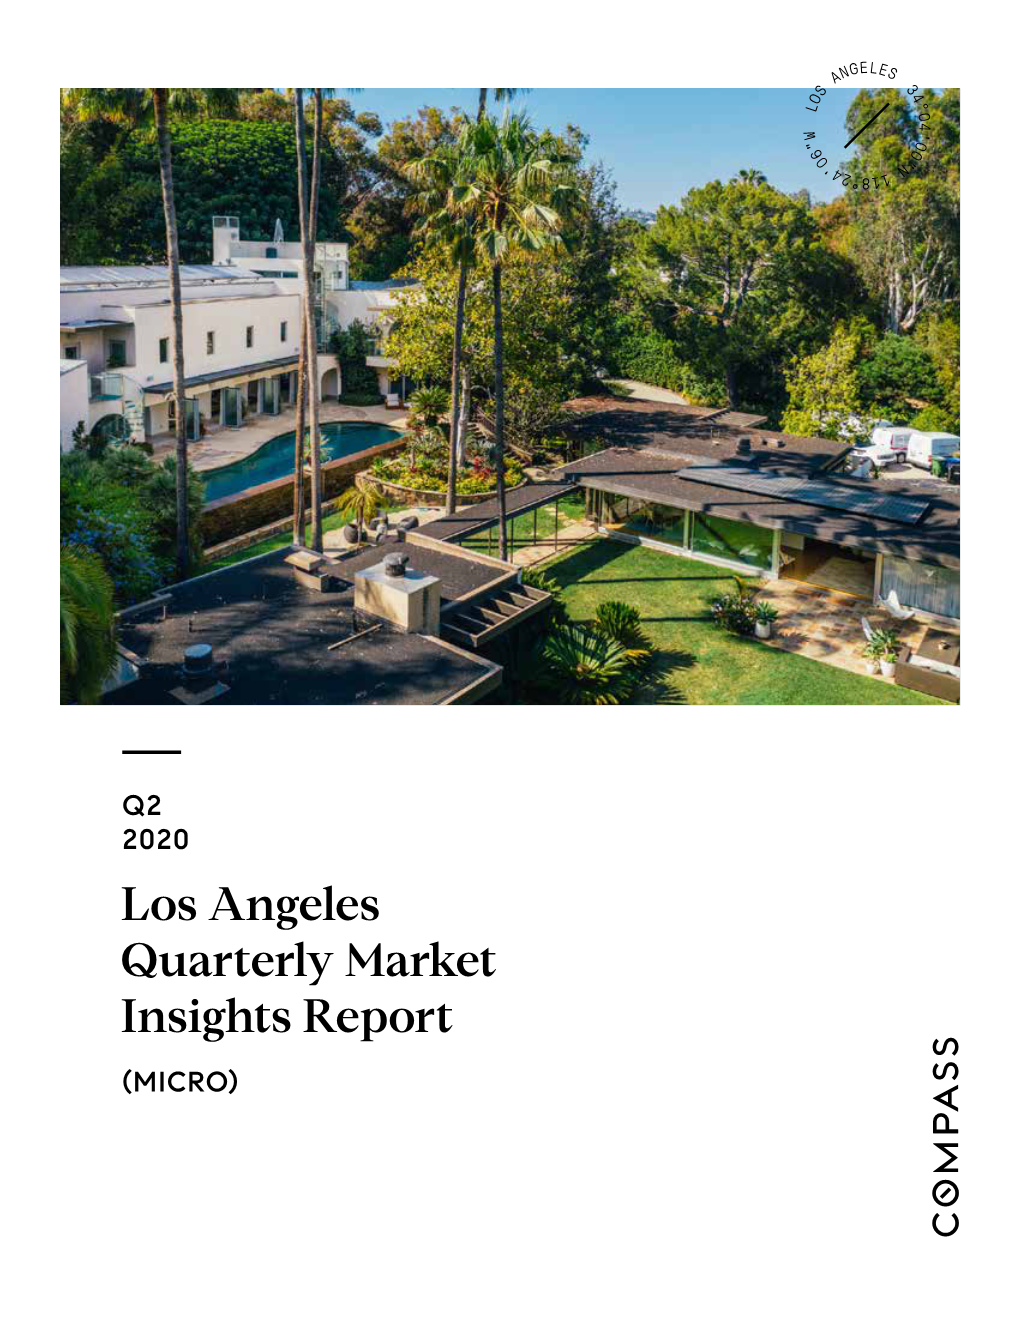 Los Angeles Quarterly Market Insights Report (MICRO) Q2 2020 | Contents